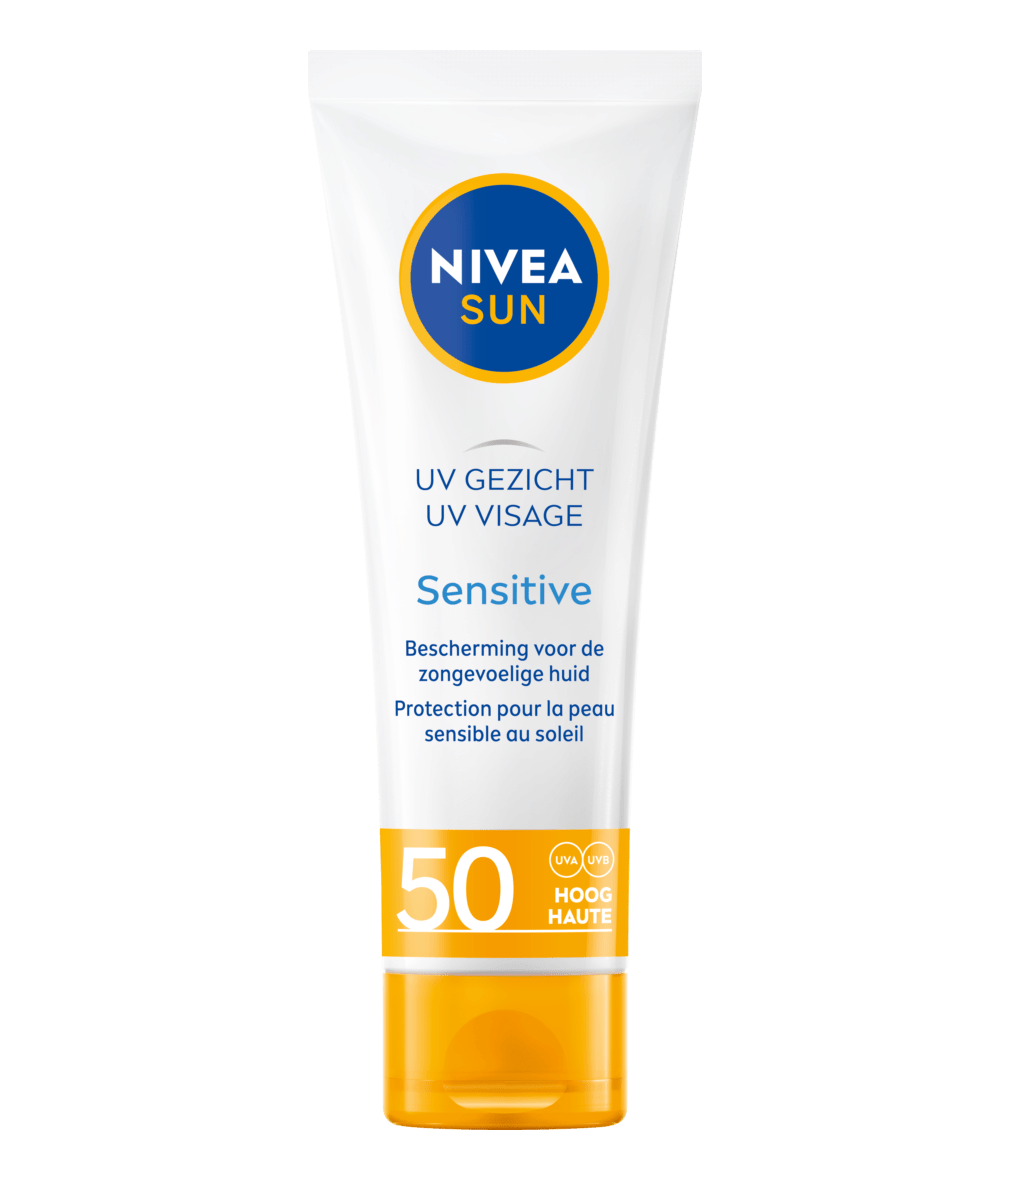 overzee tekort Kaarsen Sensitive UV Gevoelig Zonnebrandcrème SPF 50 | NIVEA SUN